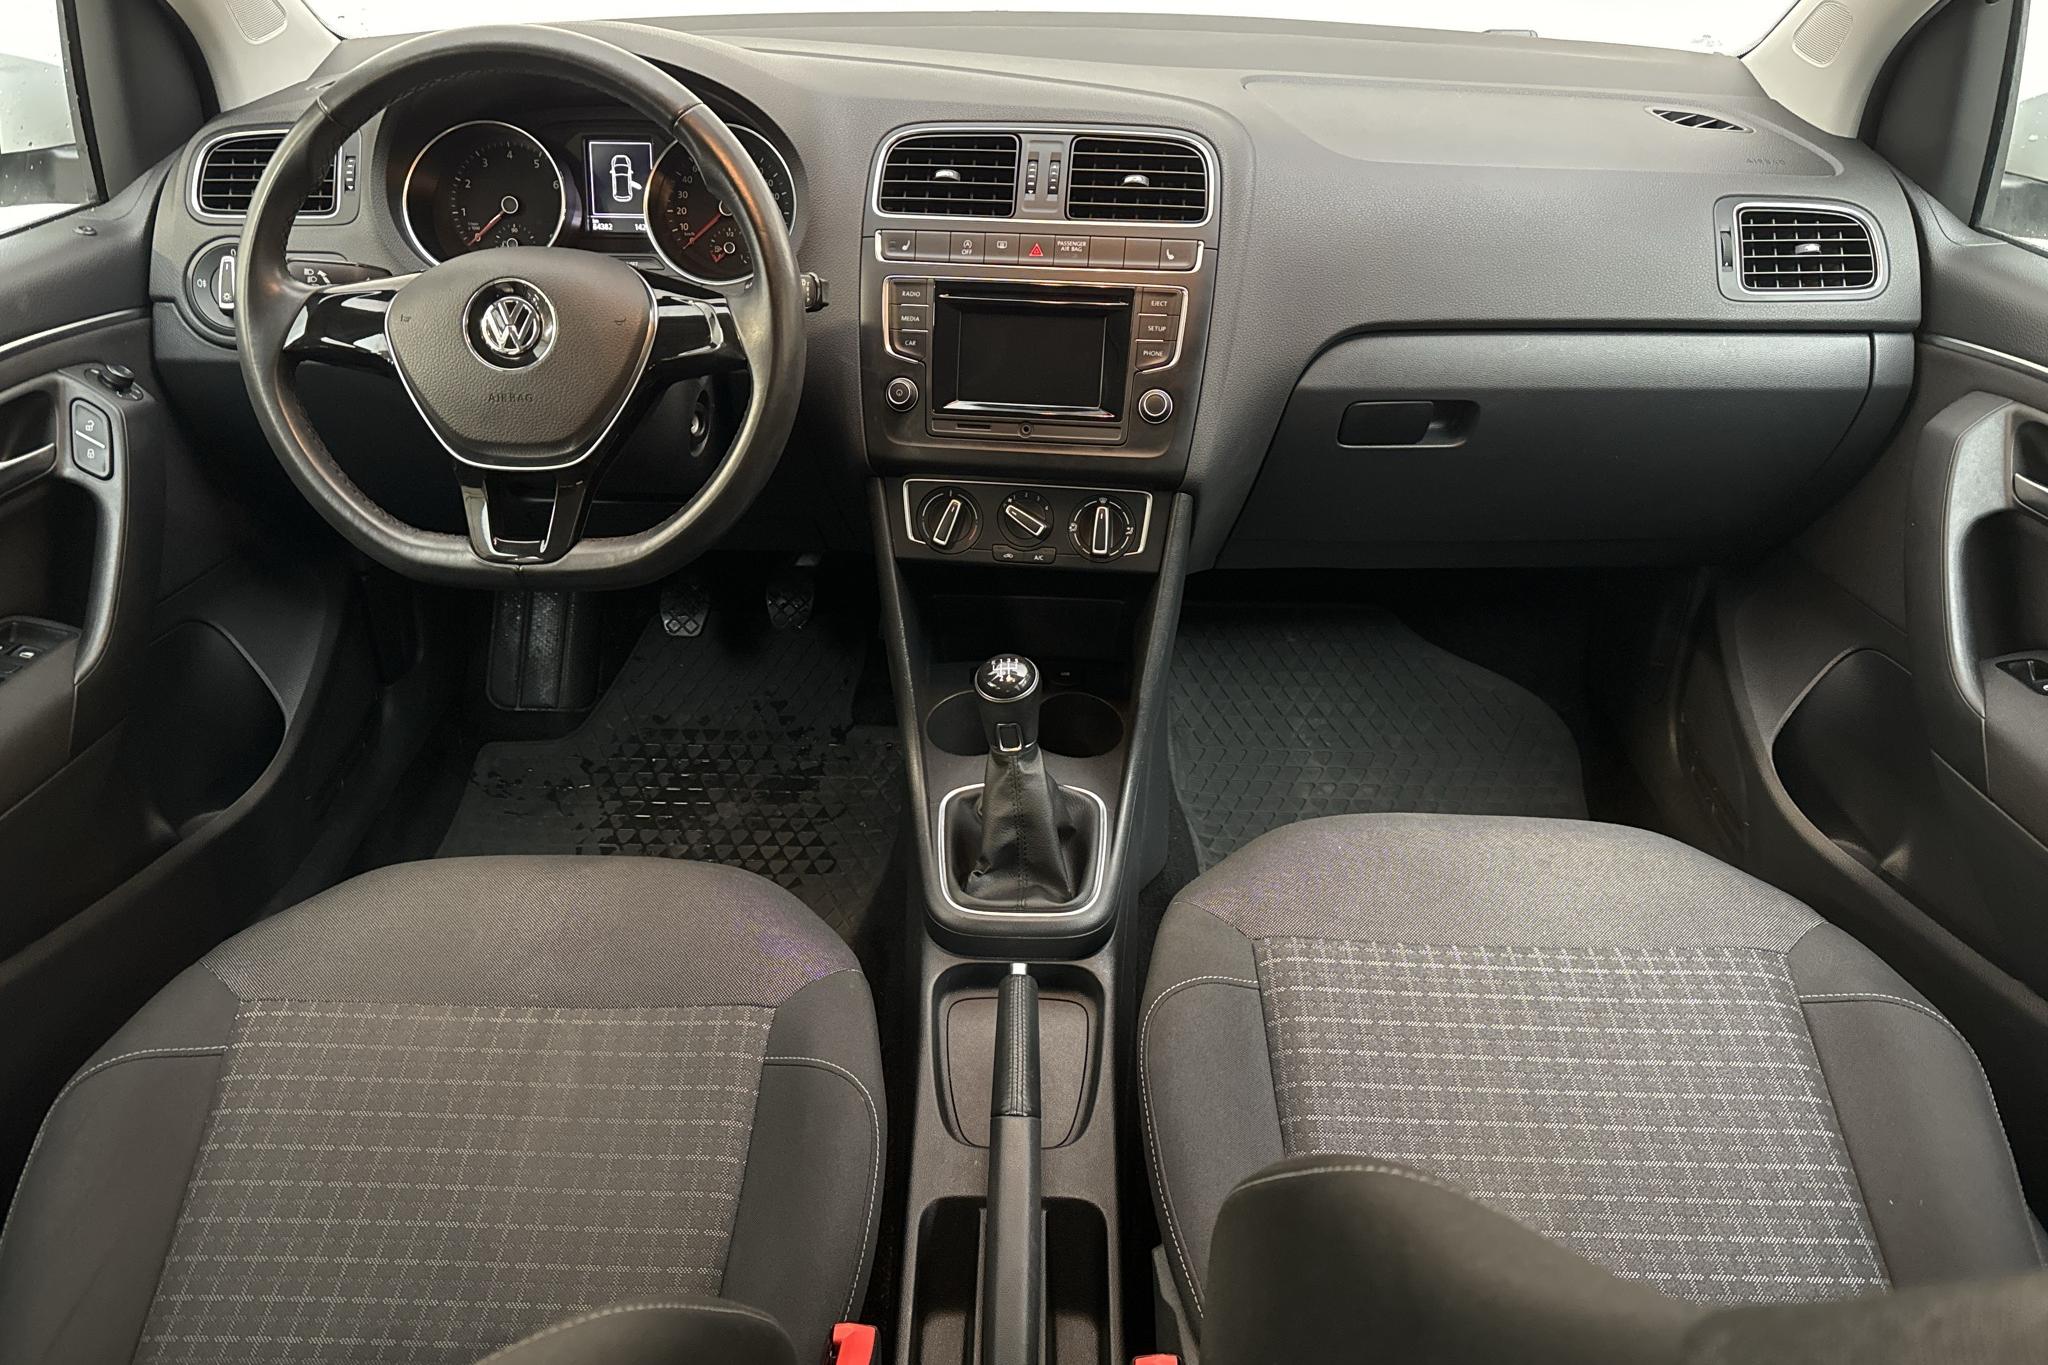 VW Polo 1.2 TSI 5dr (90hk) - 84 380 km - Manuaalinen - valkoinen - 2016